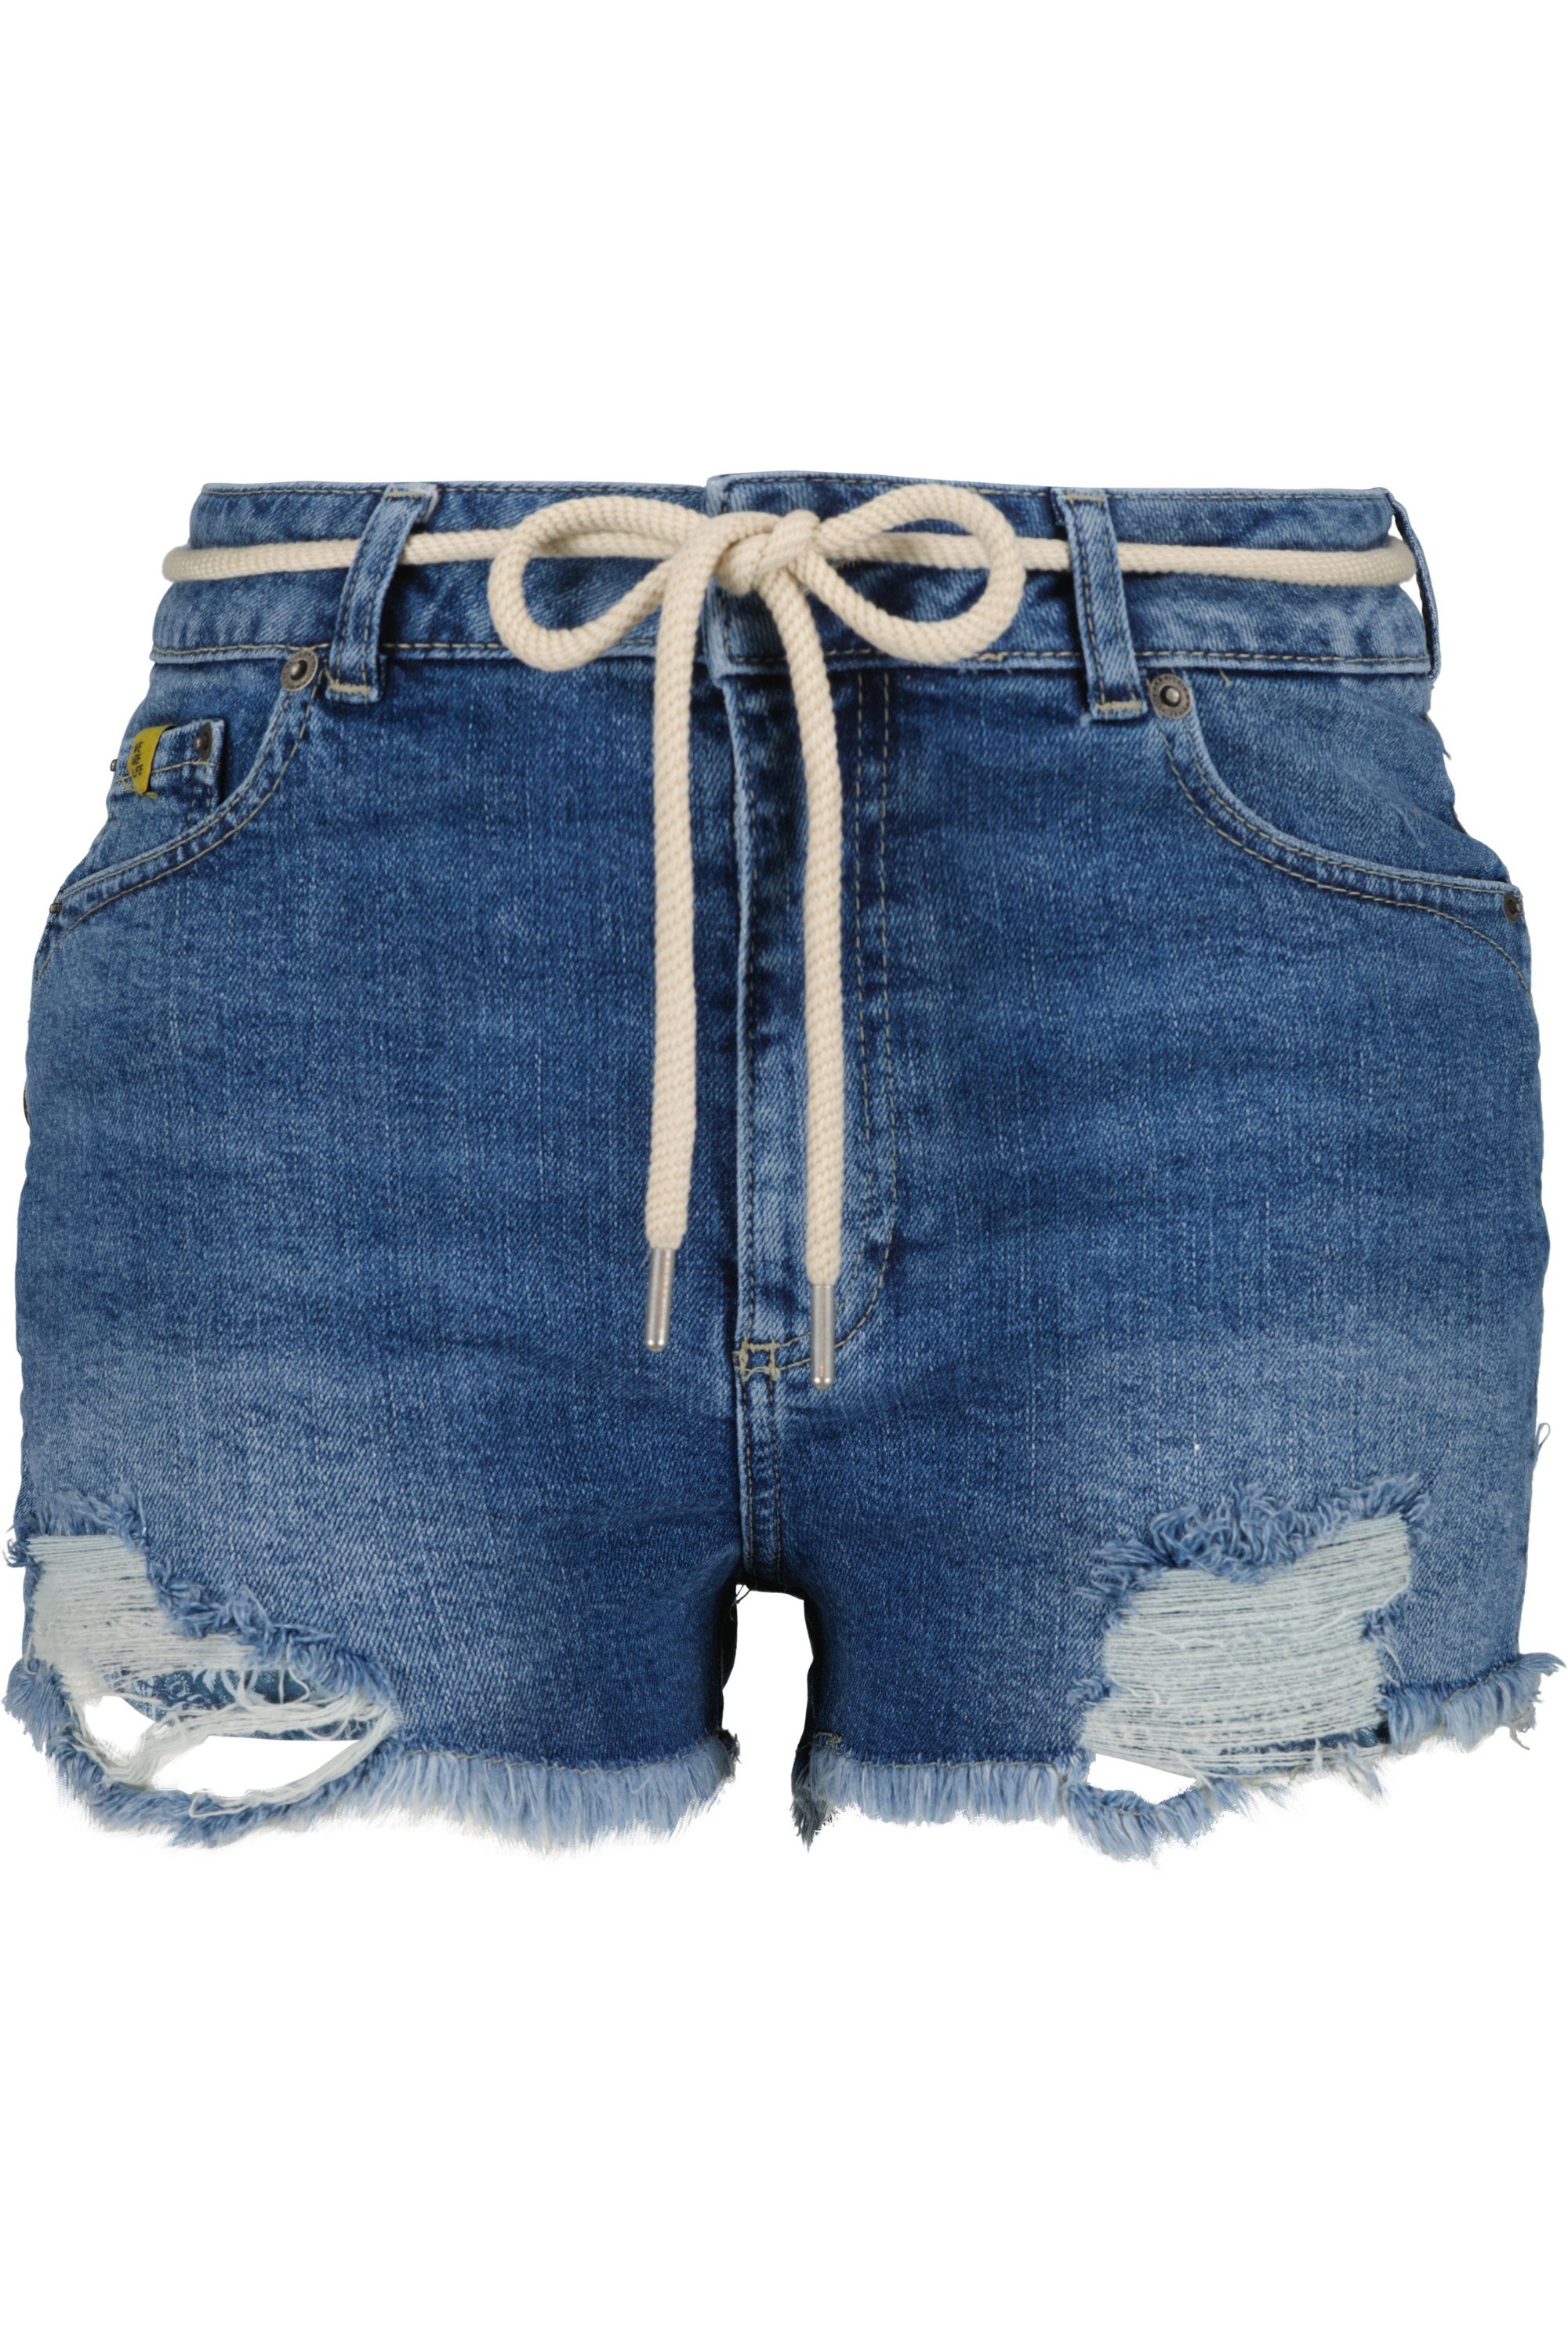 Hose Kickin Damen washed Alife & LatoyaAK DNM Shorts Jeansshorts, A kurze dark denim Shorts